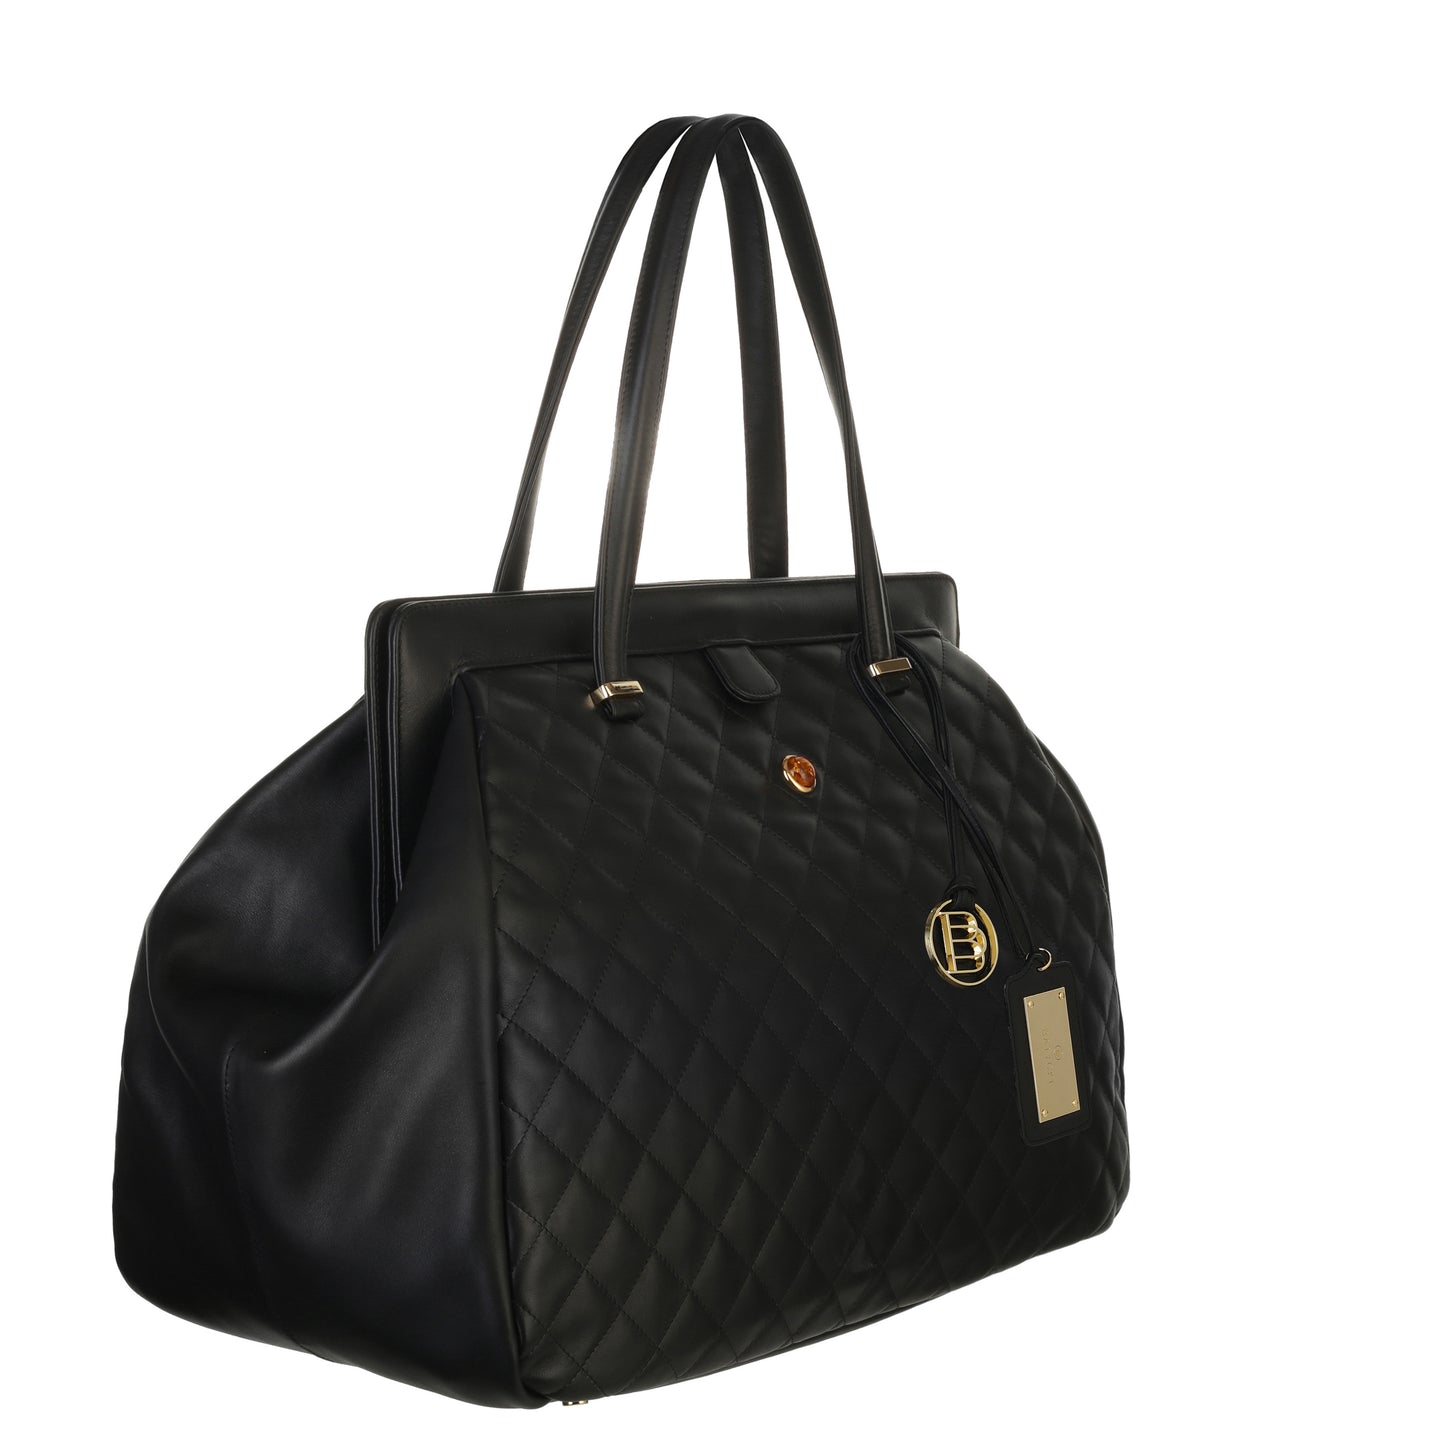 EMMA NAPA BLACK women's leather handbag